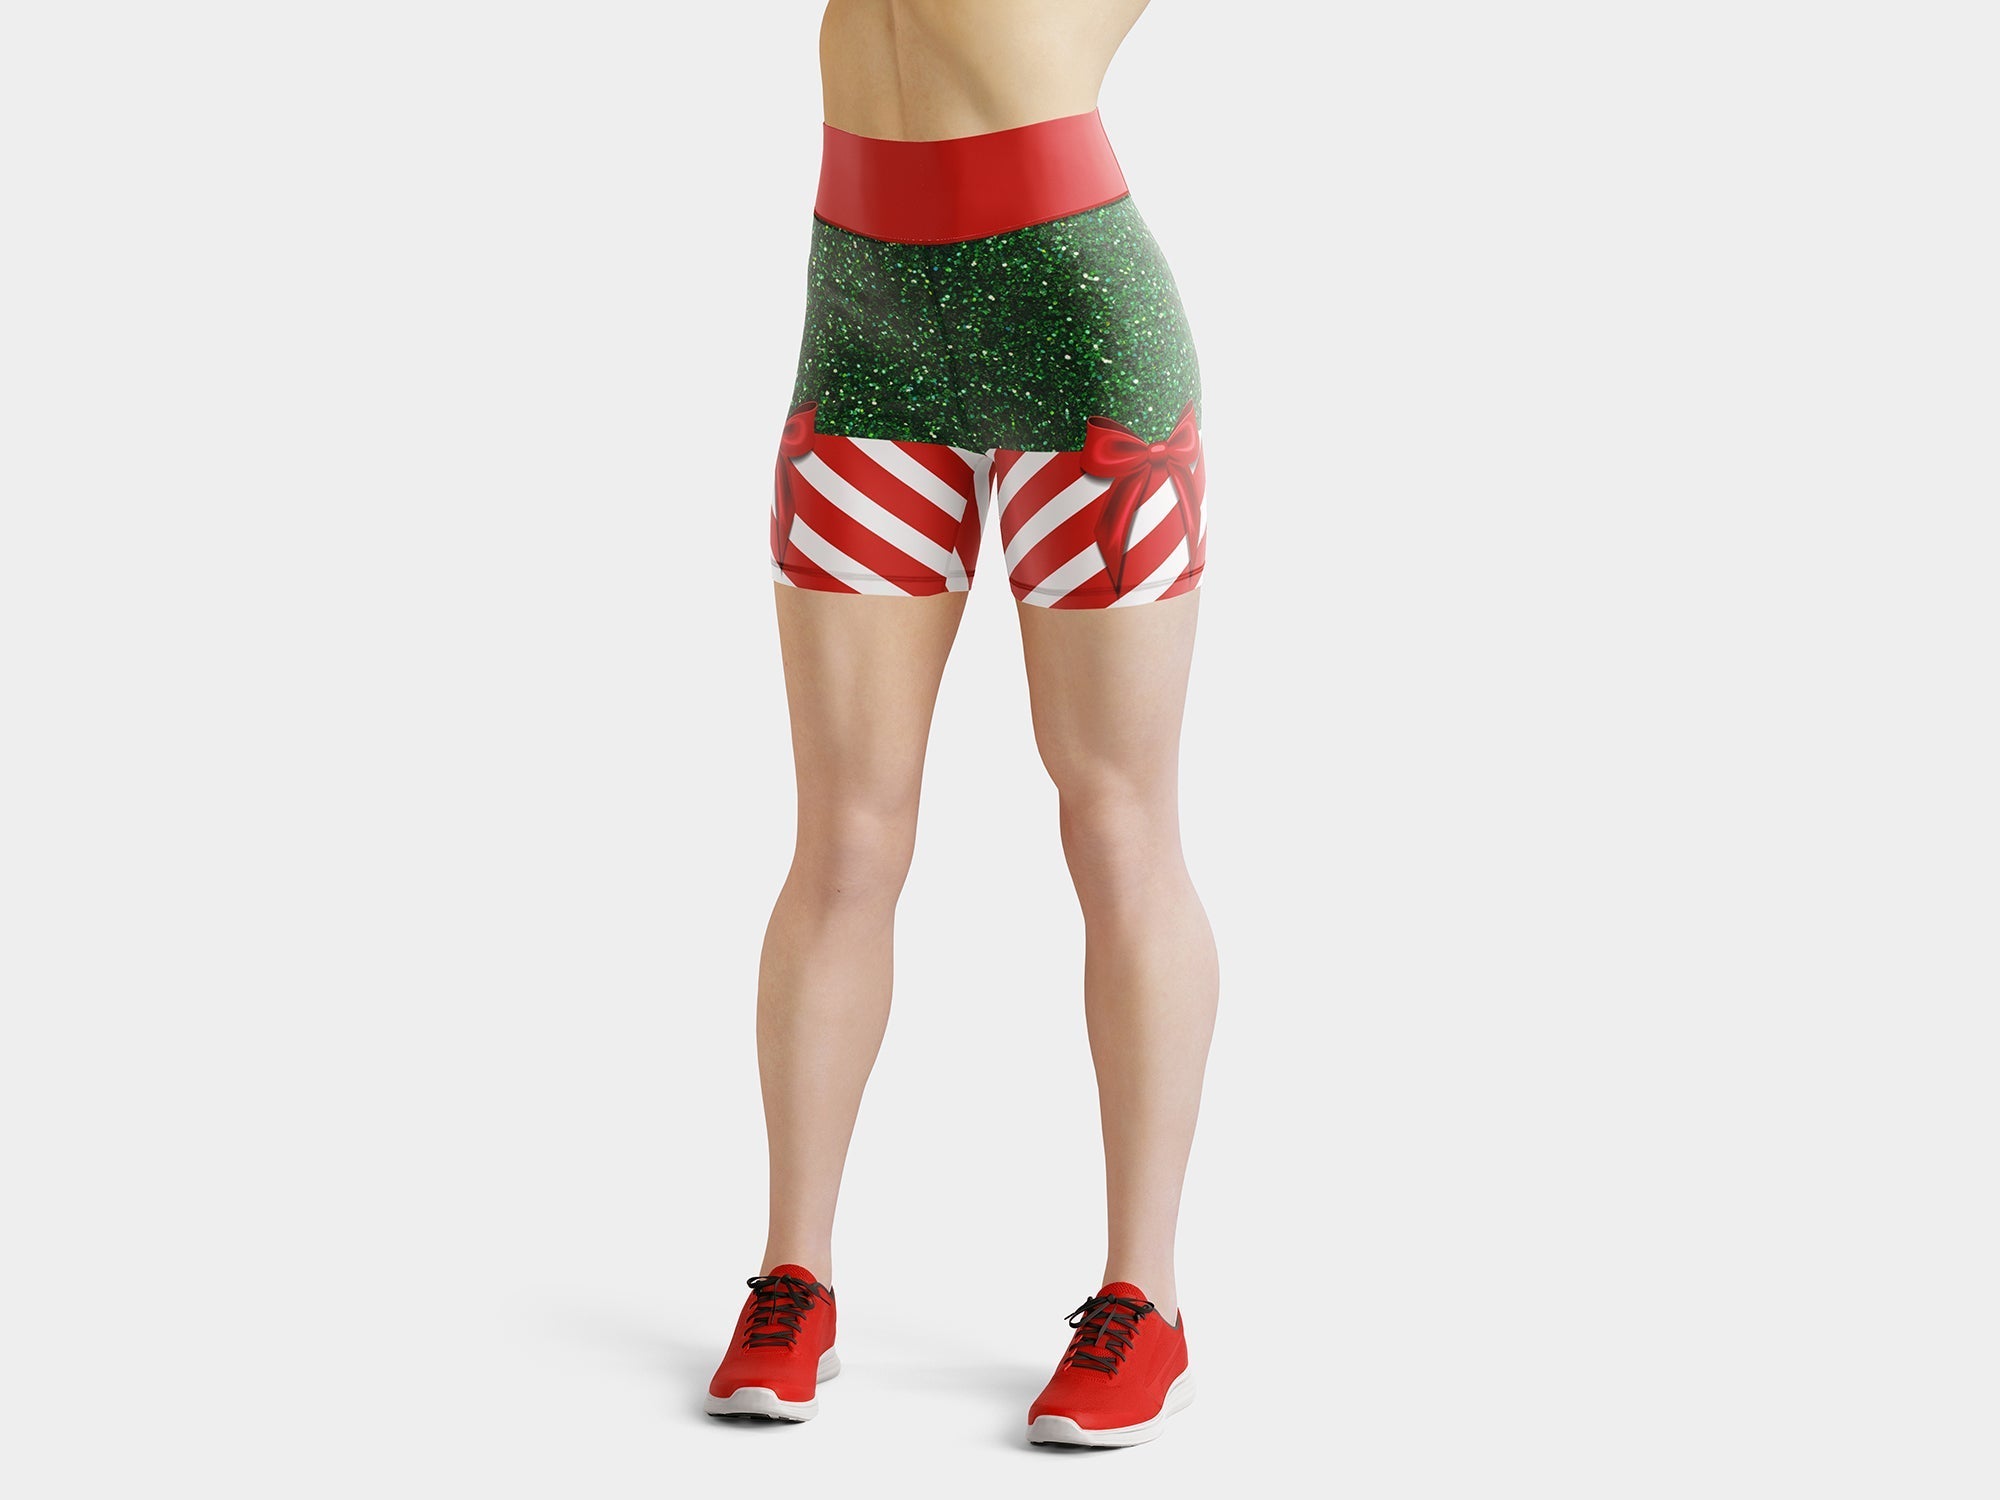 Candy Stripe Christmas Yoga Shorts